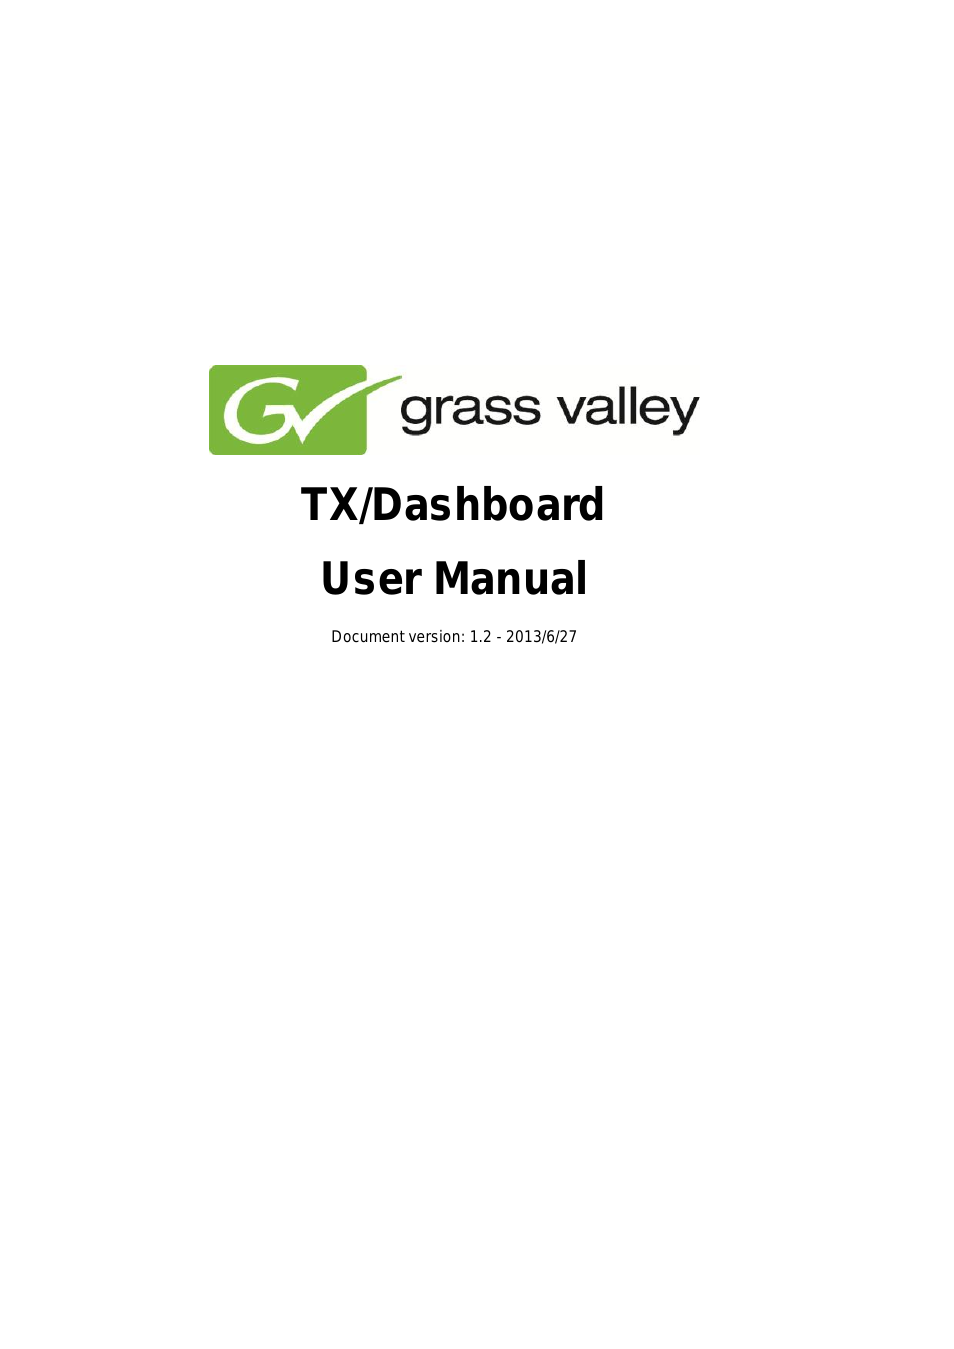 K2 TX/Dashboard User Manual v.1.2